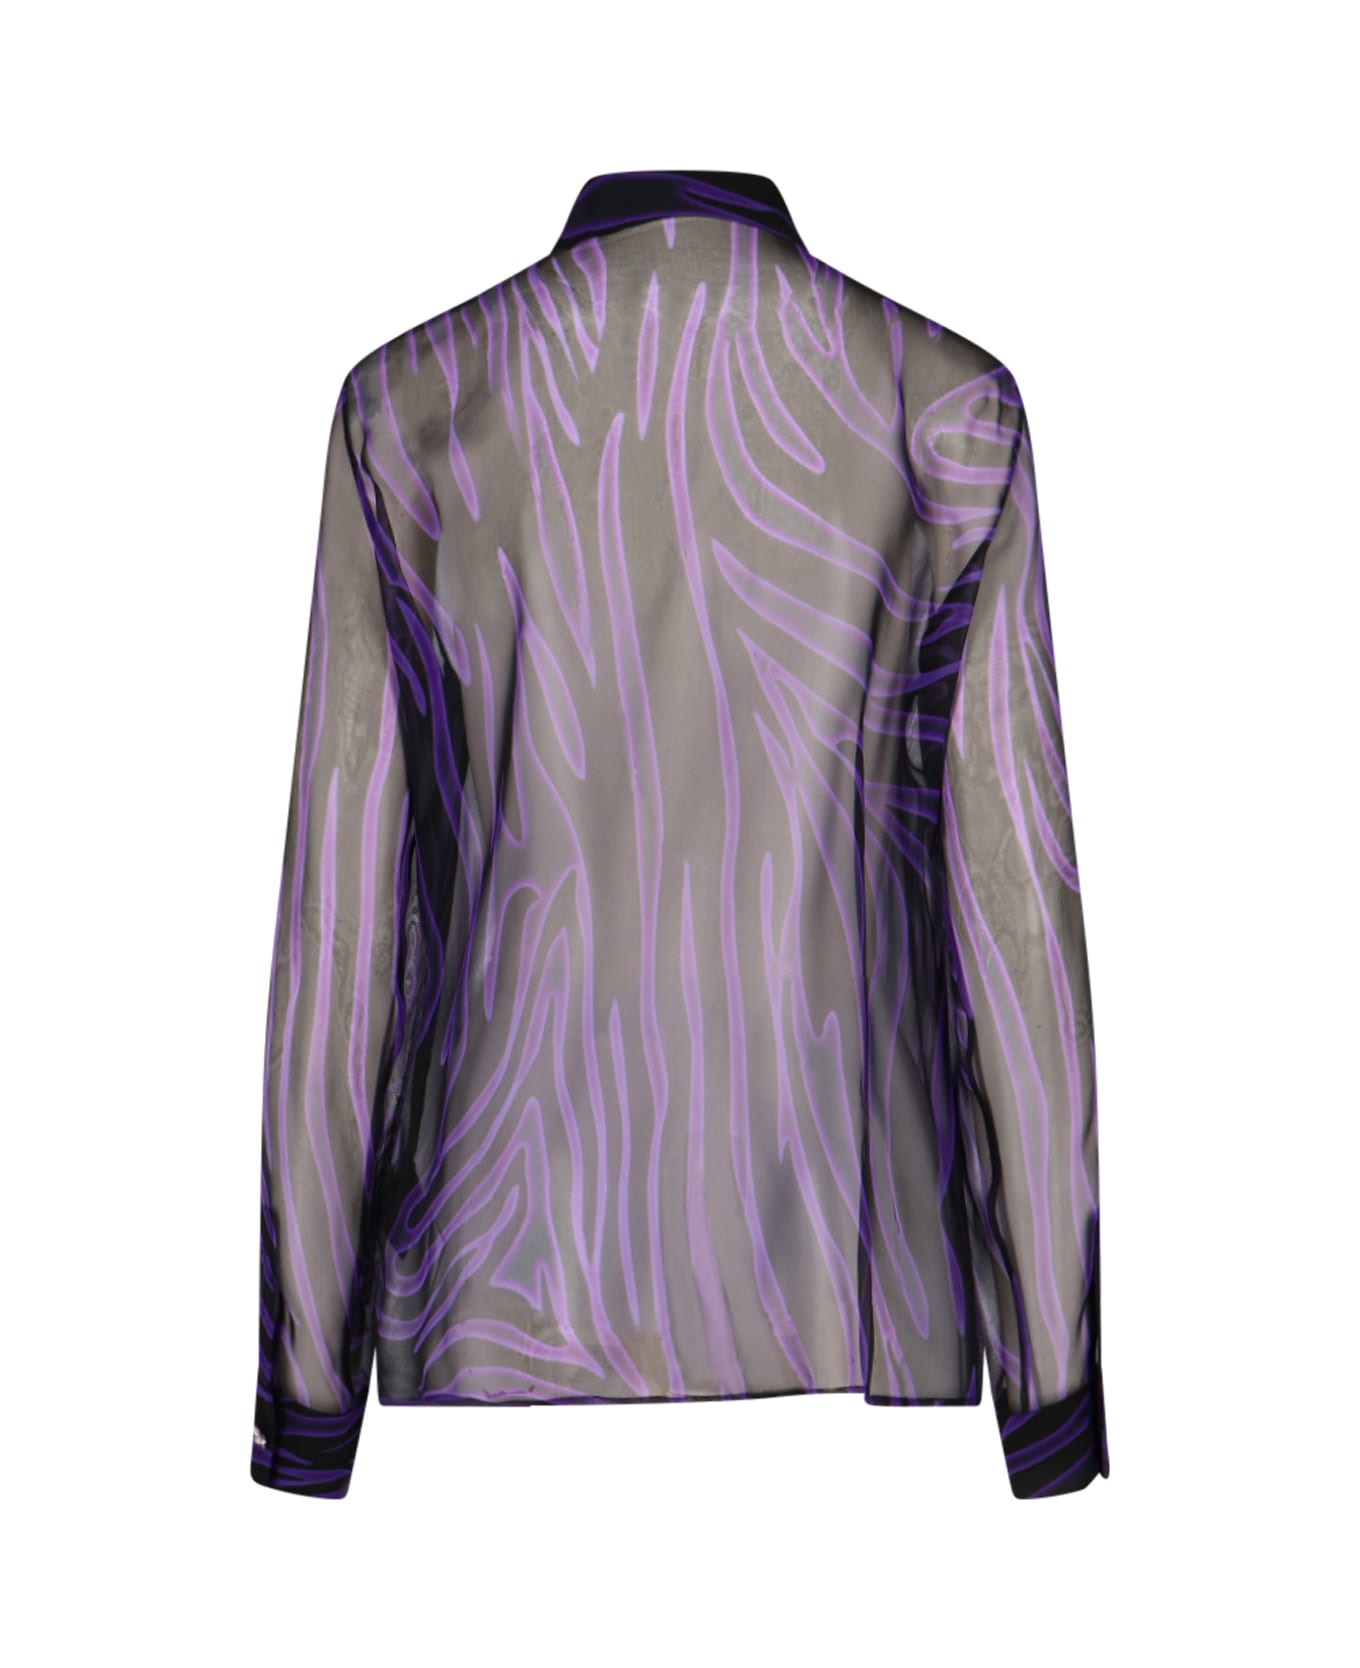 Versace Zebra Sheer Silk Shirt - Violet